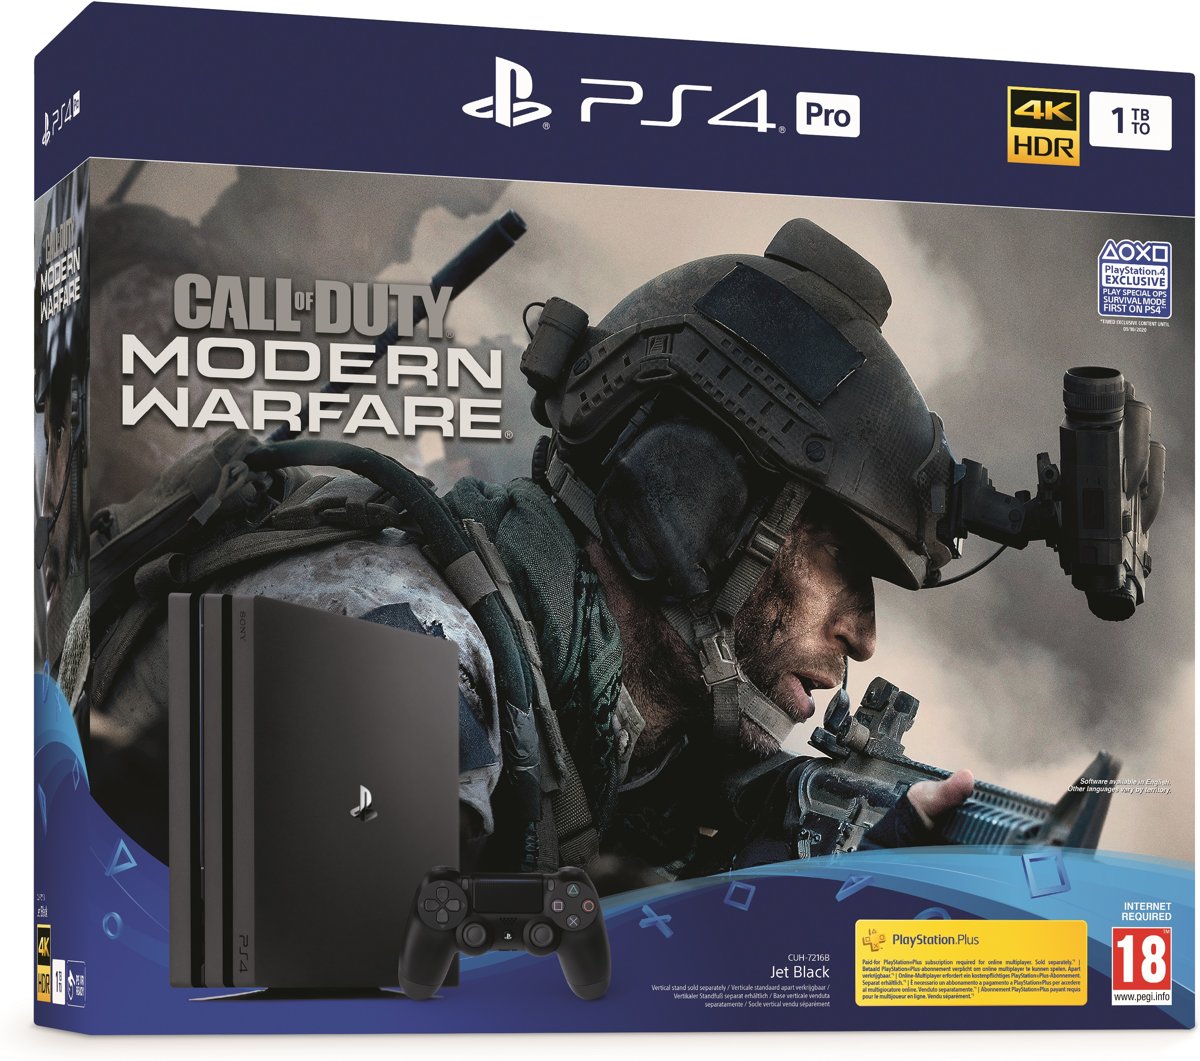 PlayStation 4 Pro (1 TB) + Call of Duty: Modern Warfare (PS4), Sony